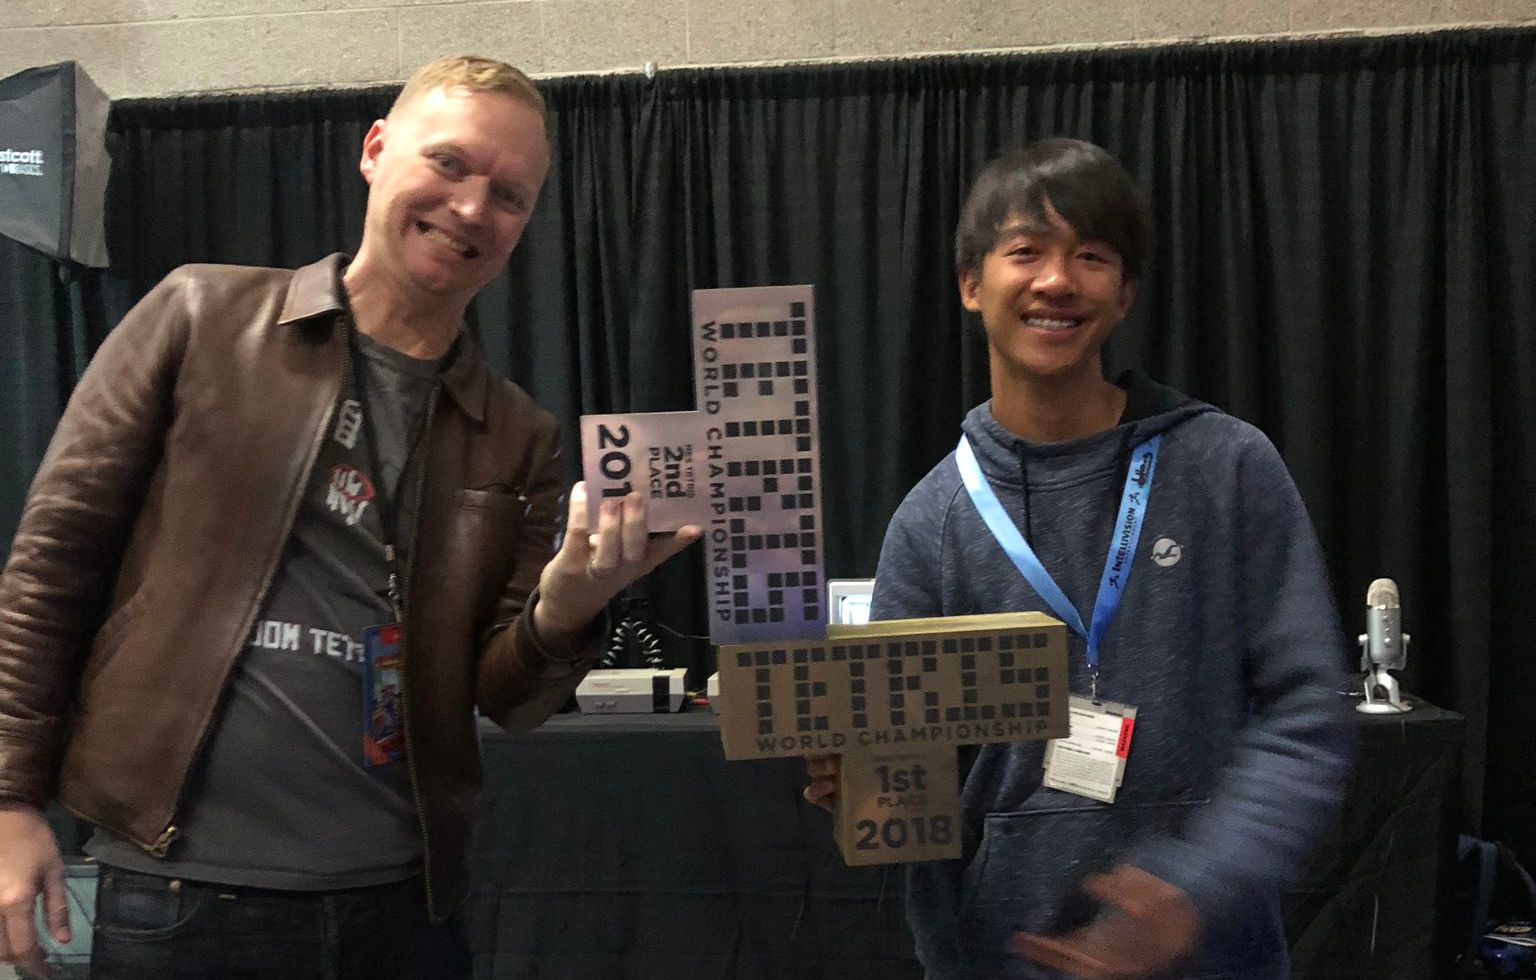 Tetris wolrd Champ 2018